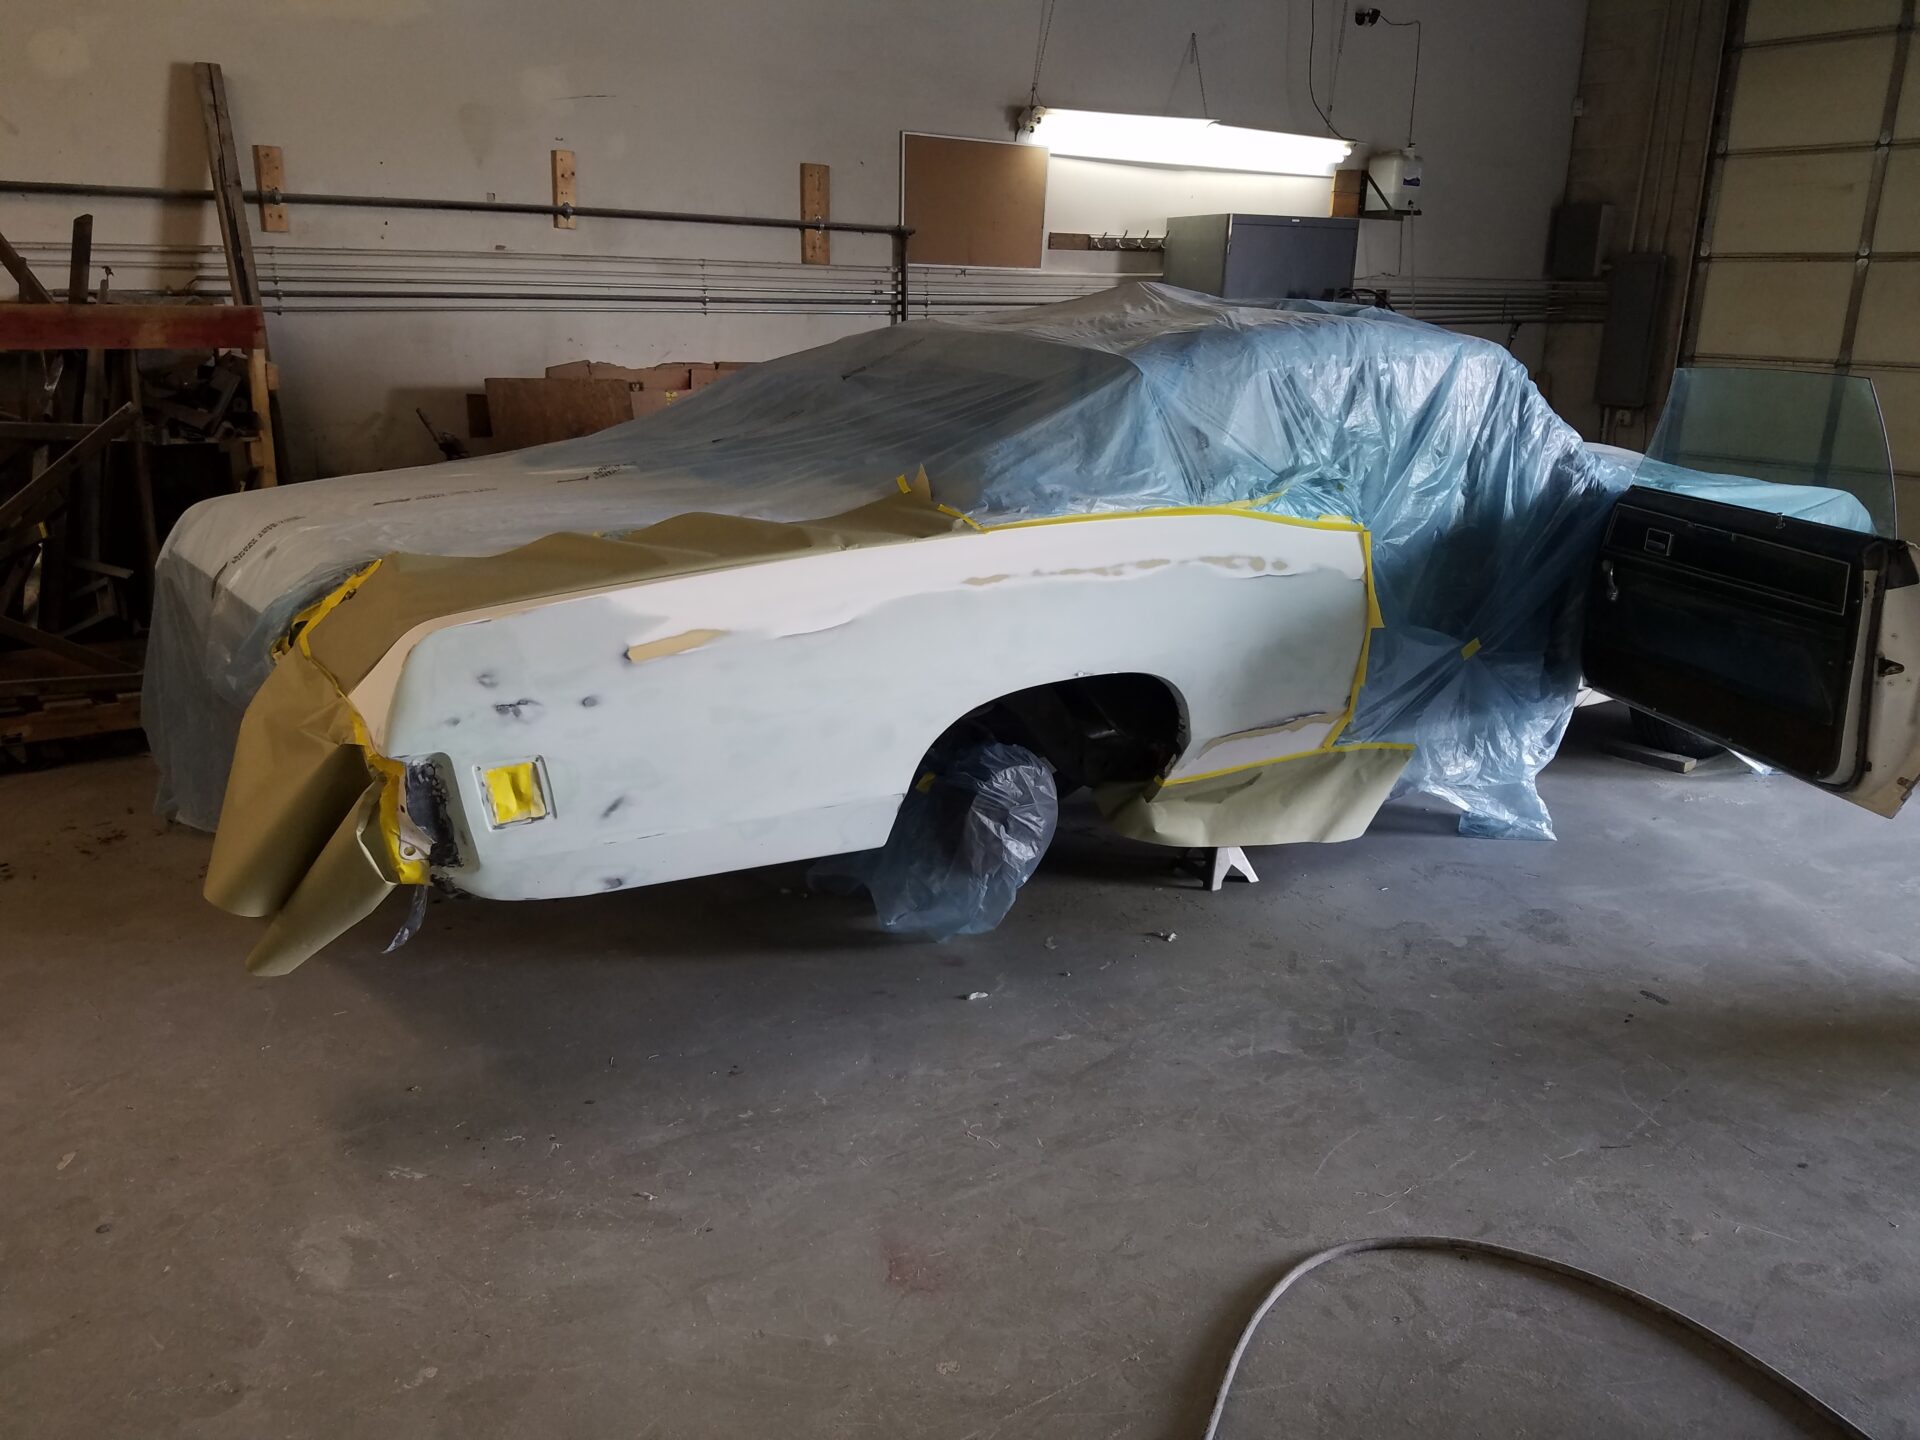 A covered 1970 Pontiac Bonneville for the paint job